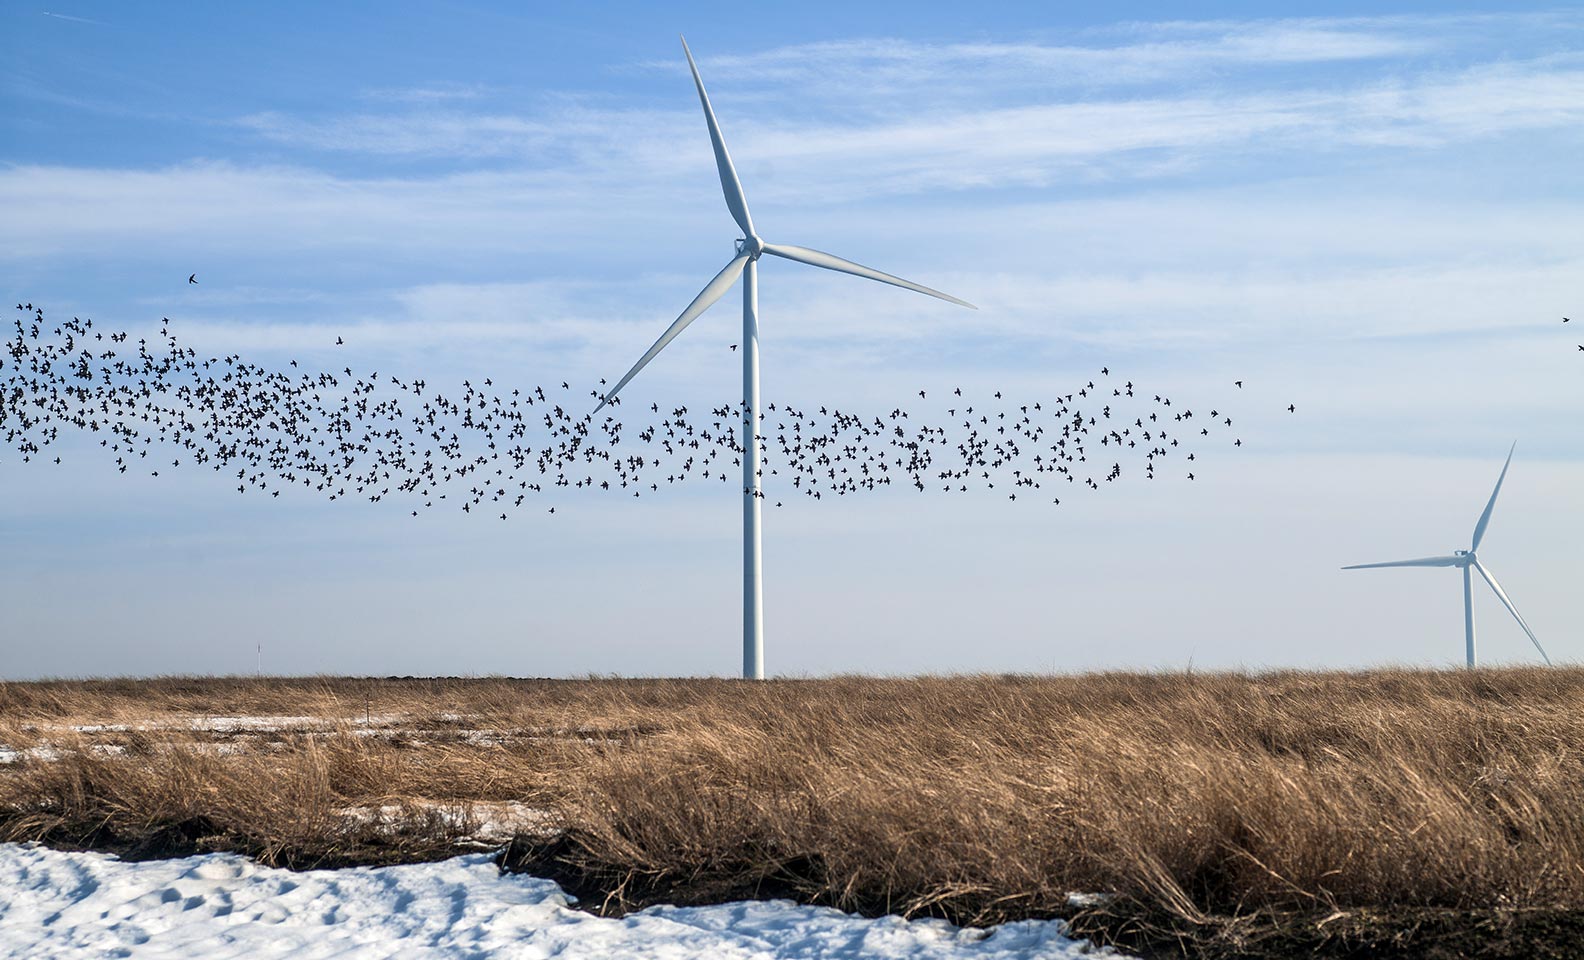 Wind shovels and flock of birds